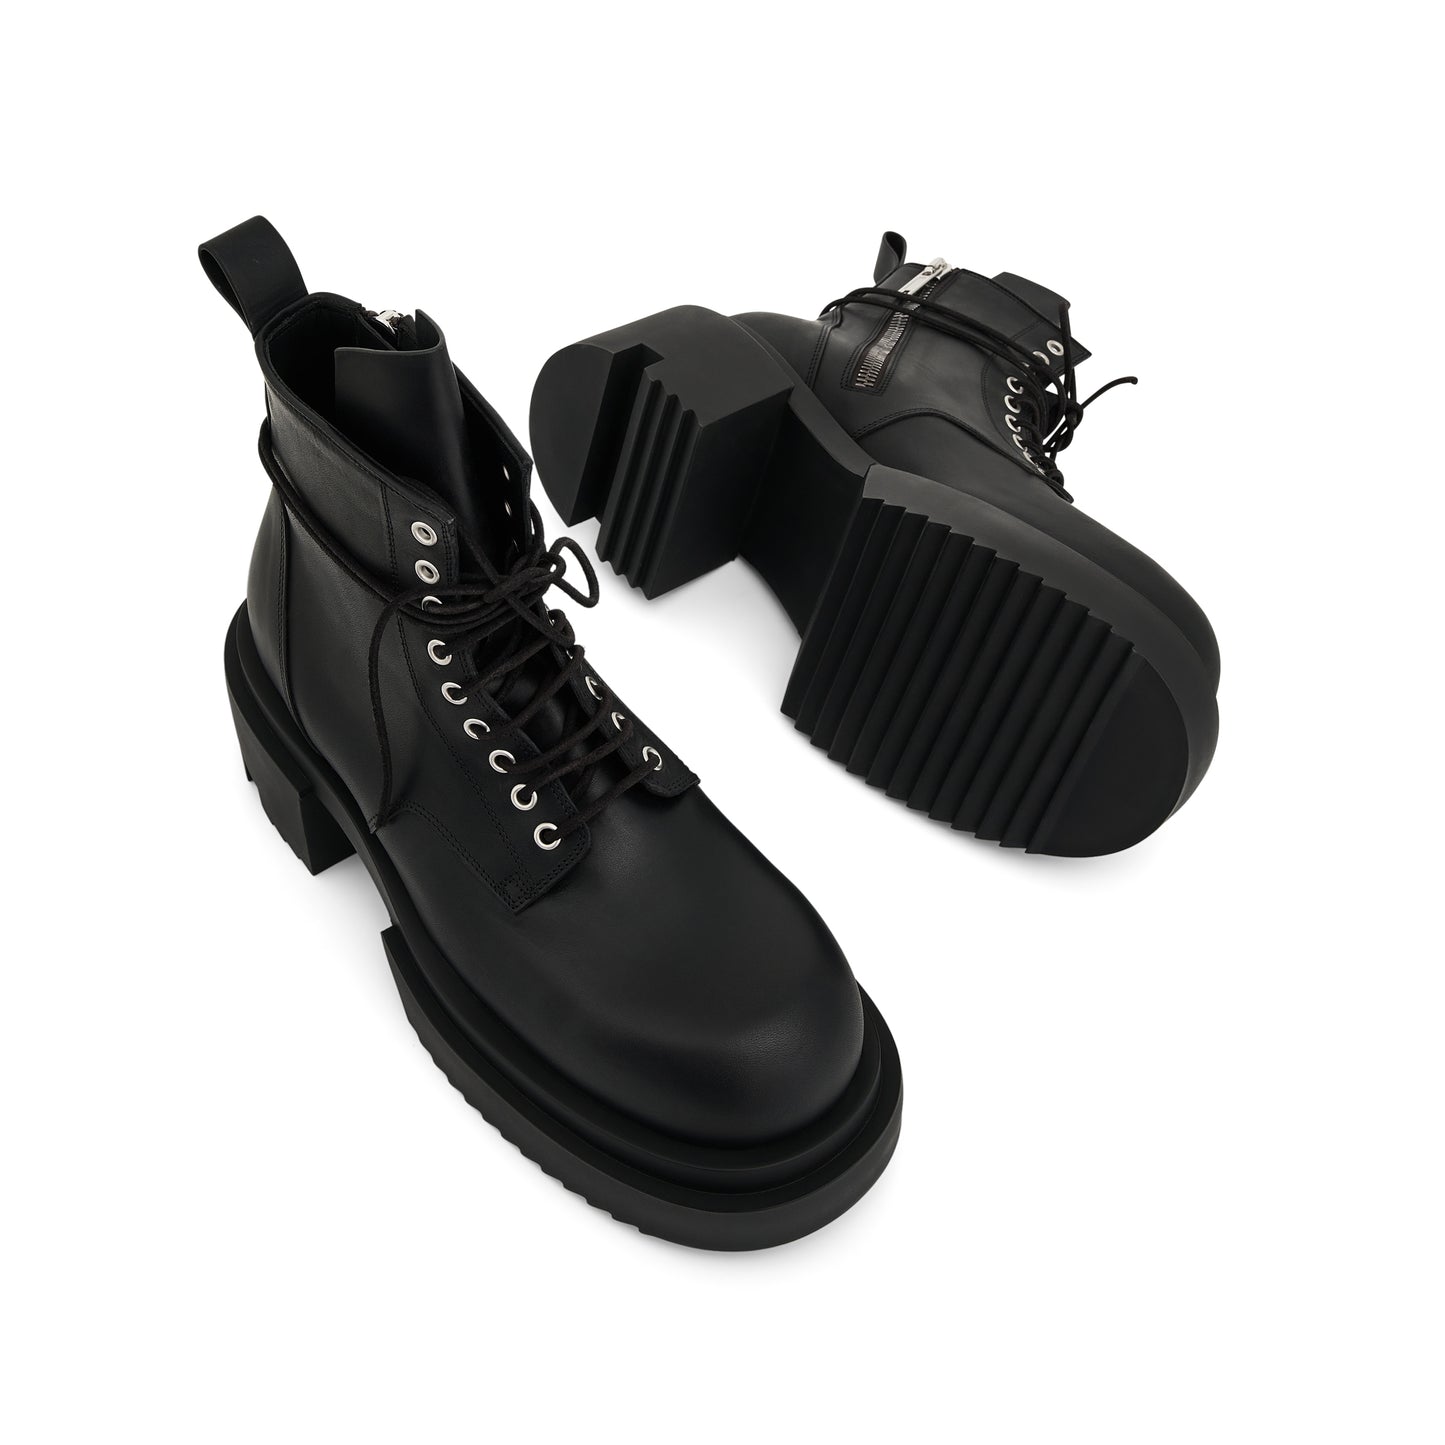 Low Army Bogun Boots in Black